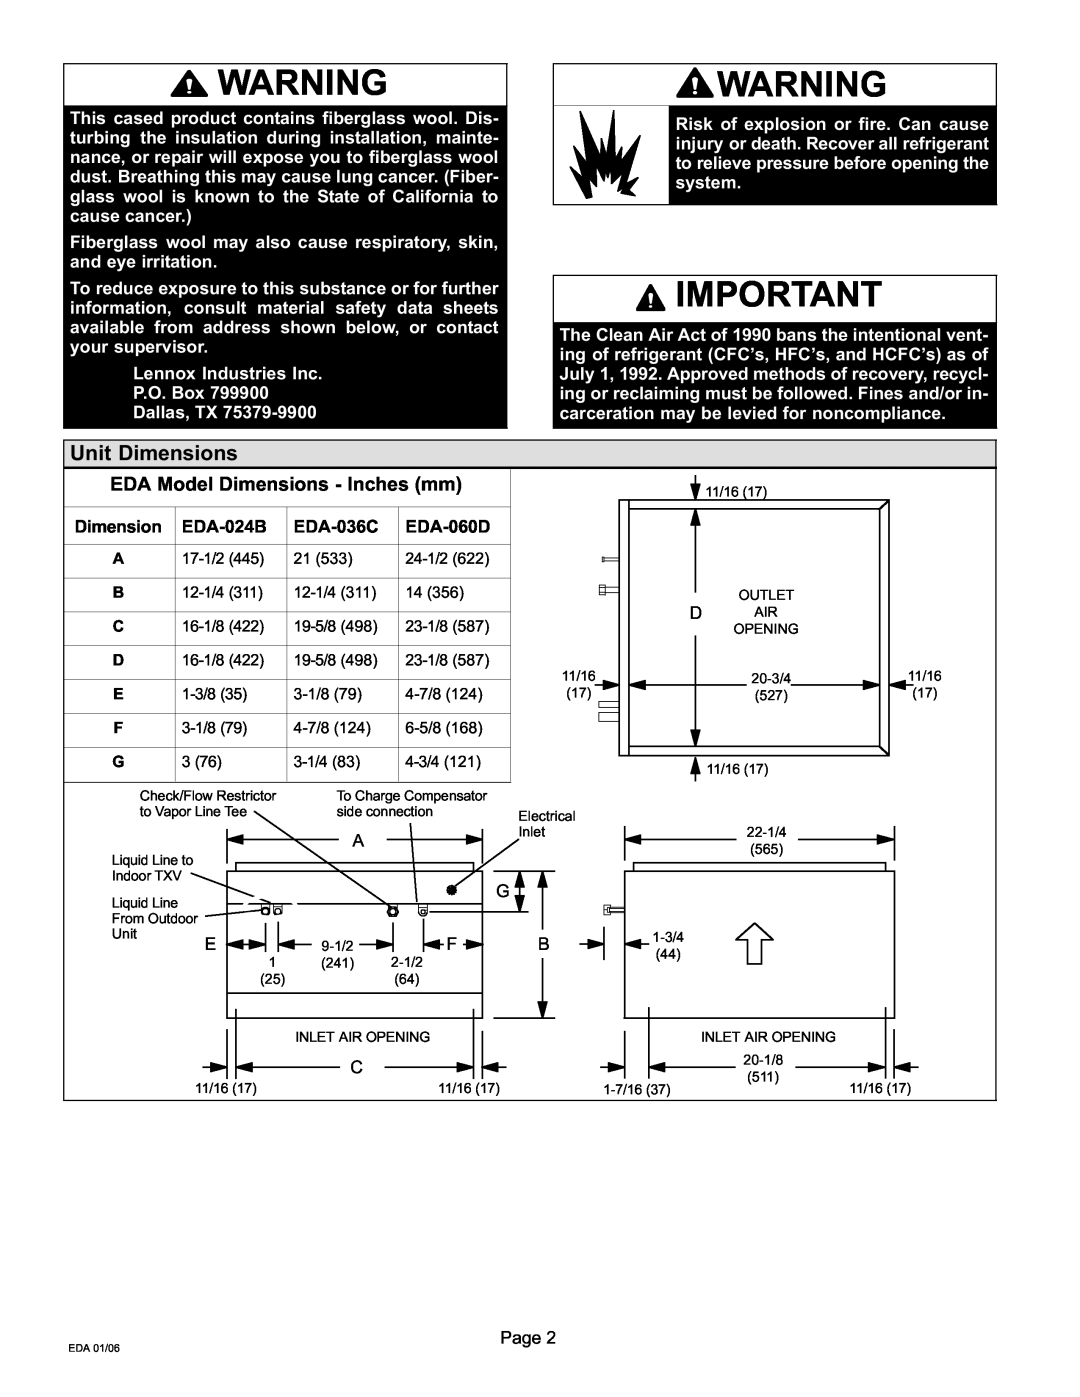 Lennox International Inc 505, 021 installation instructions Unit Dimensions, EDA Model Dimensions − Inches mm 